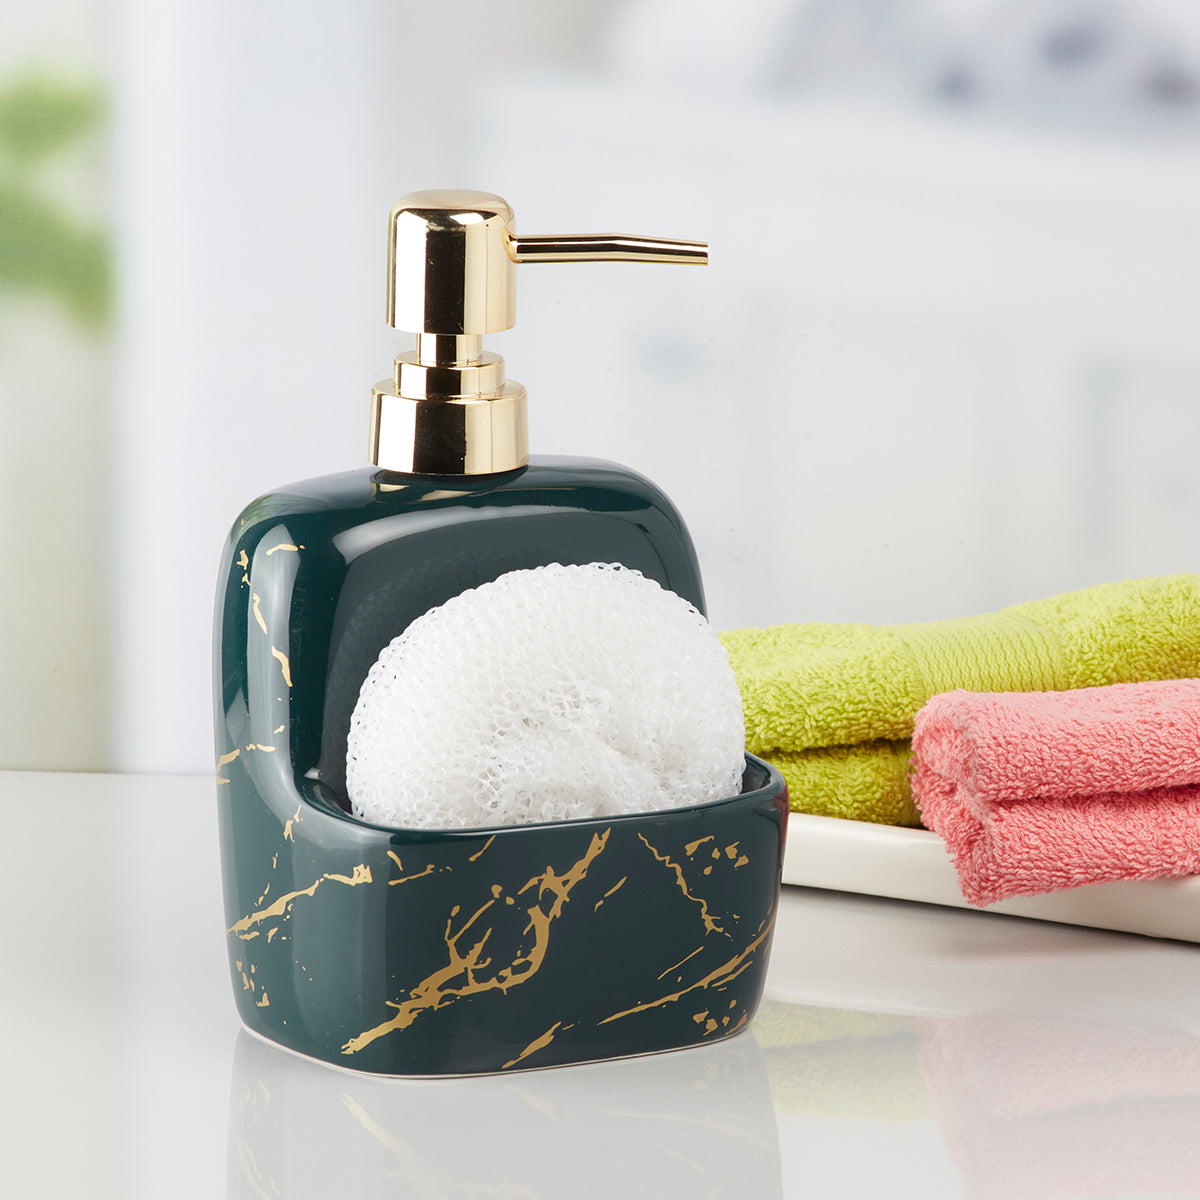 Ceramic Soap Dispenser handwash Pump for Bathroom, Set of 1, Green/Gold (10206)